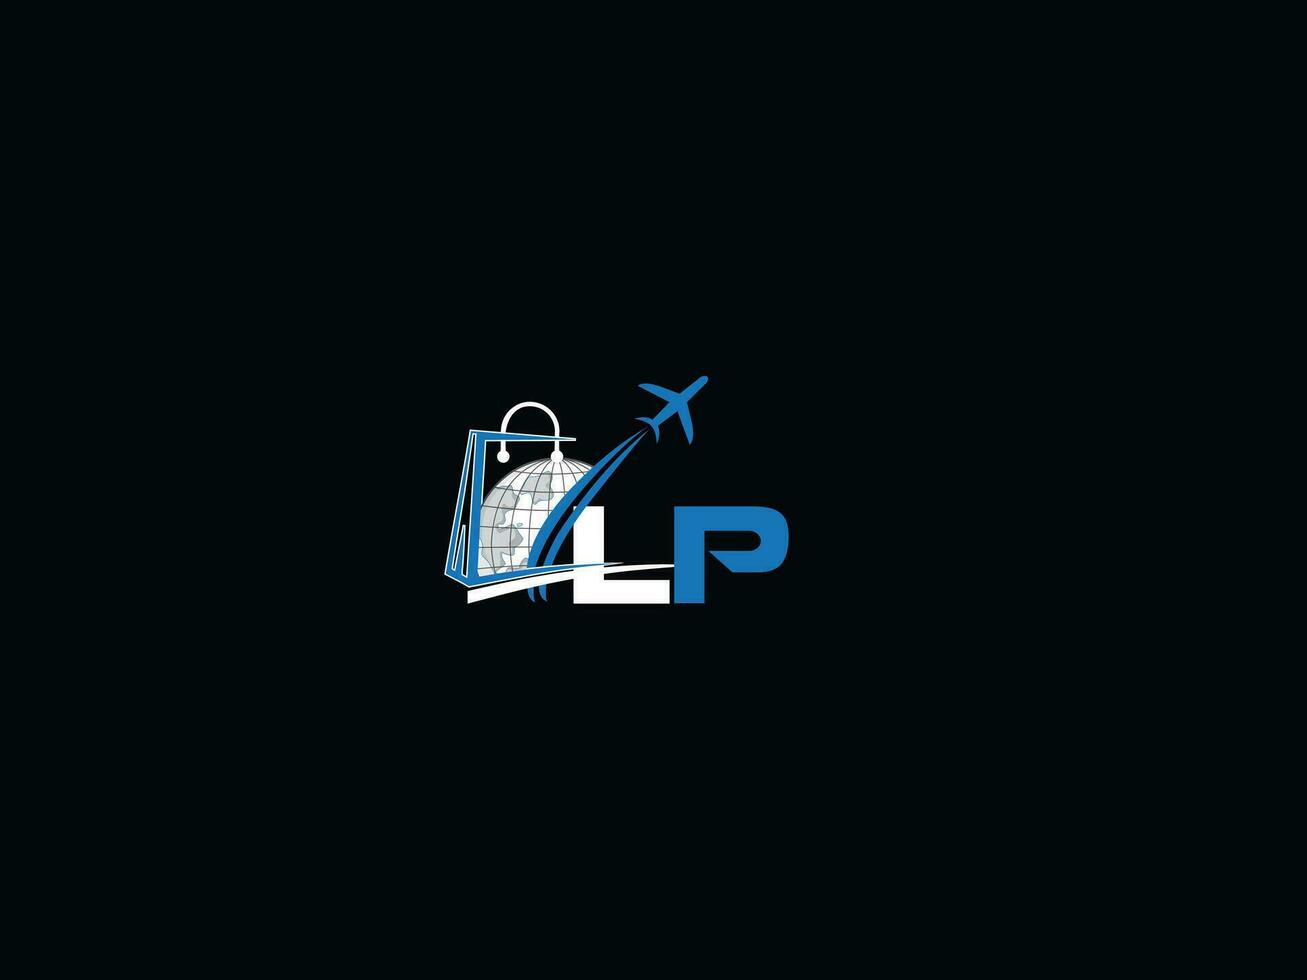 sencillo lp global logo vector, inicial de viaje lp logo letra vector